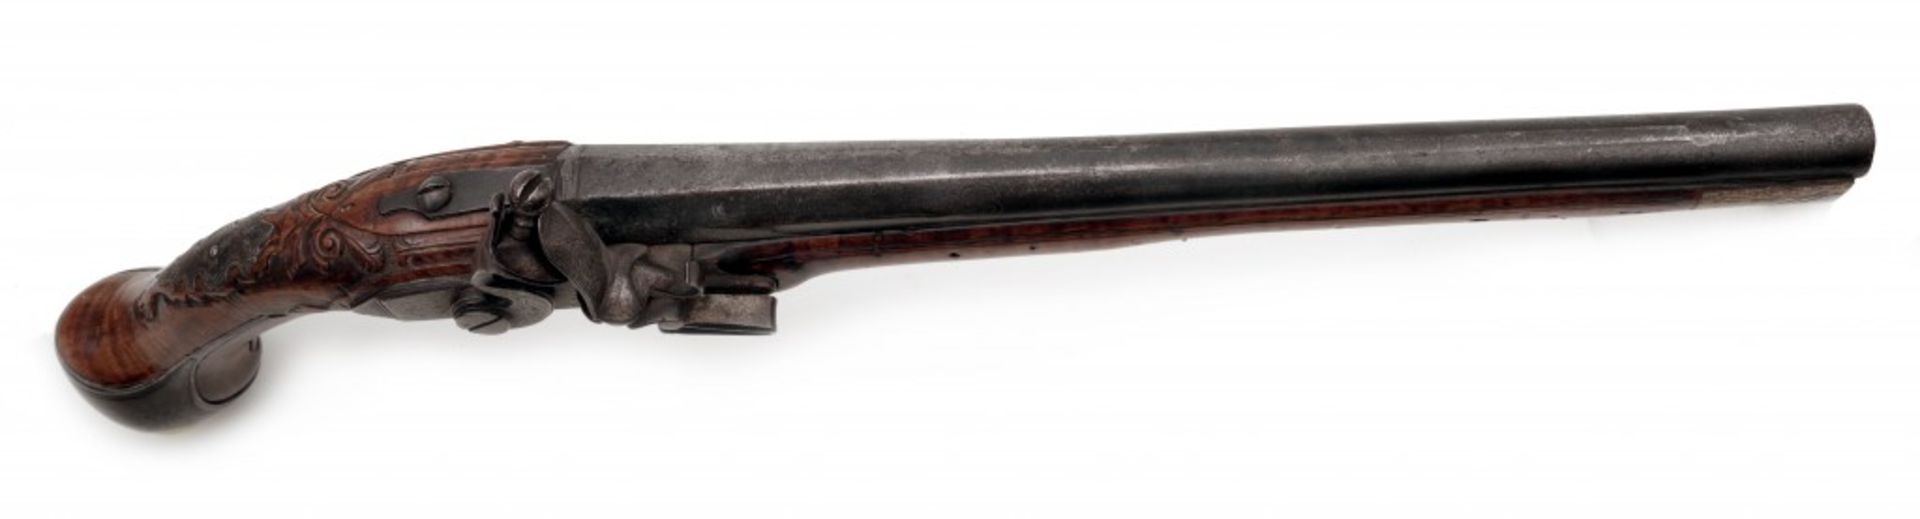 Long Flintlock Pistol - Image 3 of 4